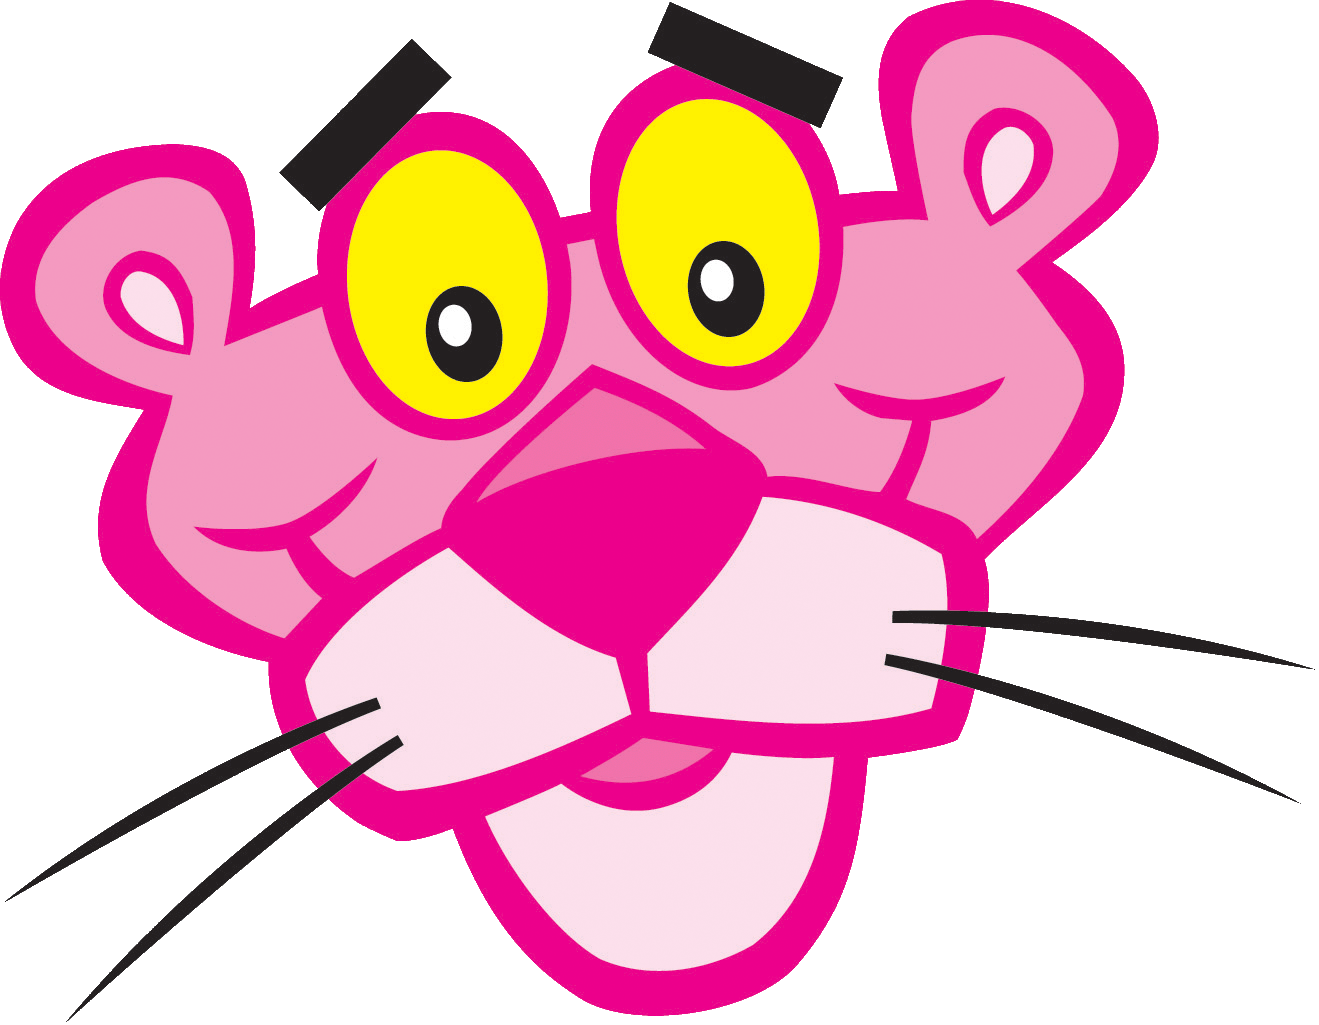 Pink Panther Cartoon - ClipArt Best